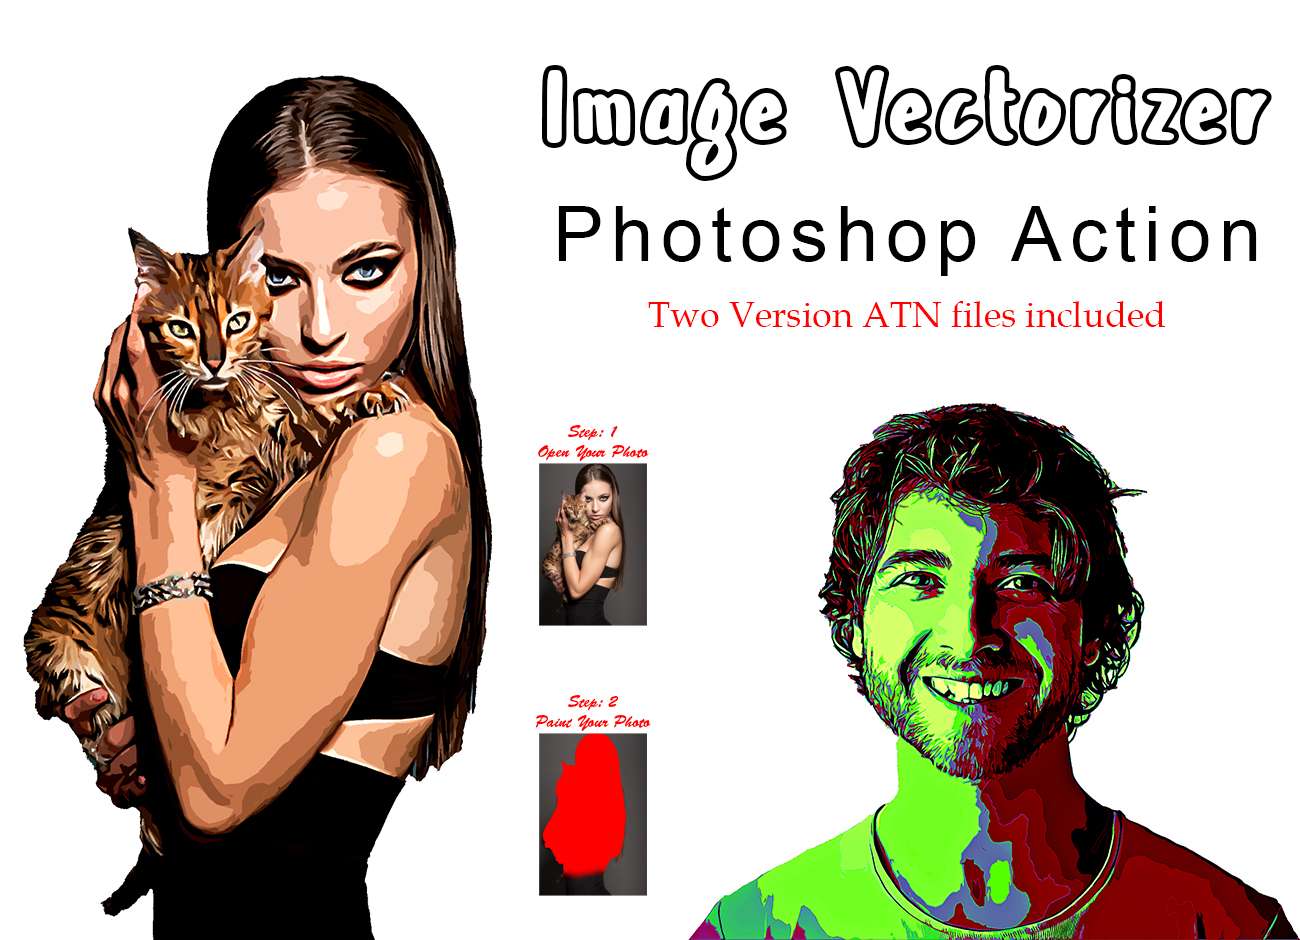 Image Vectorizer Photoshop Action